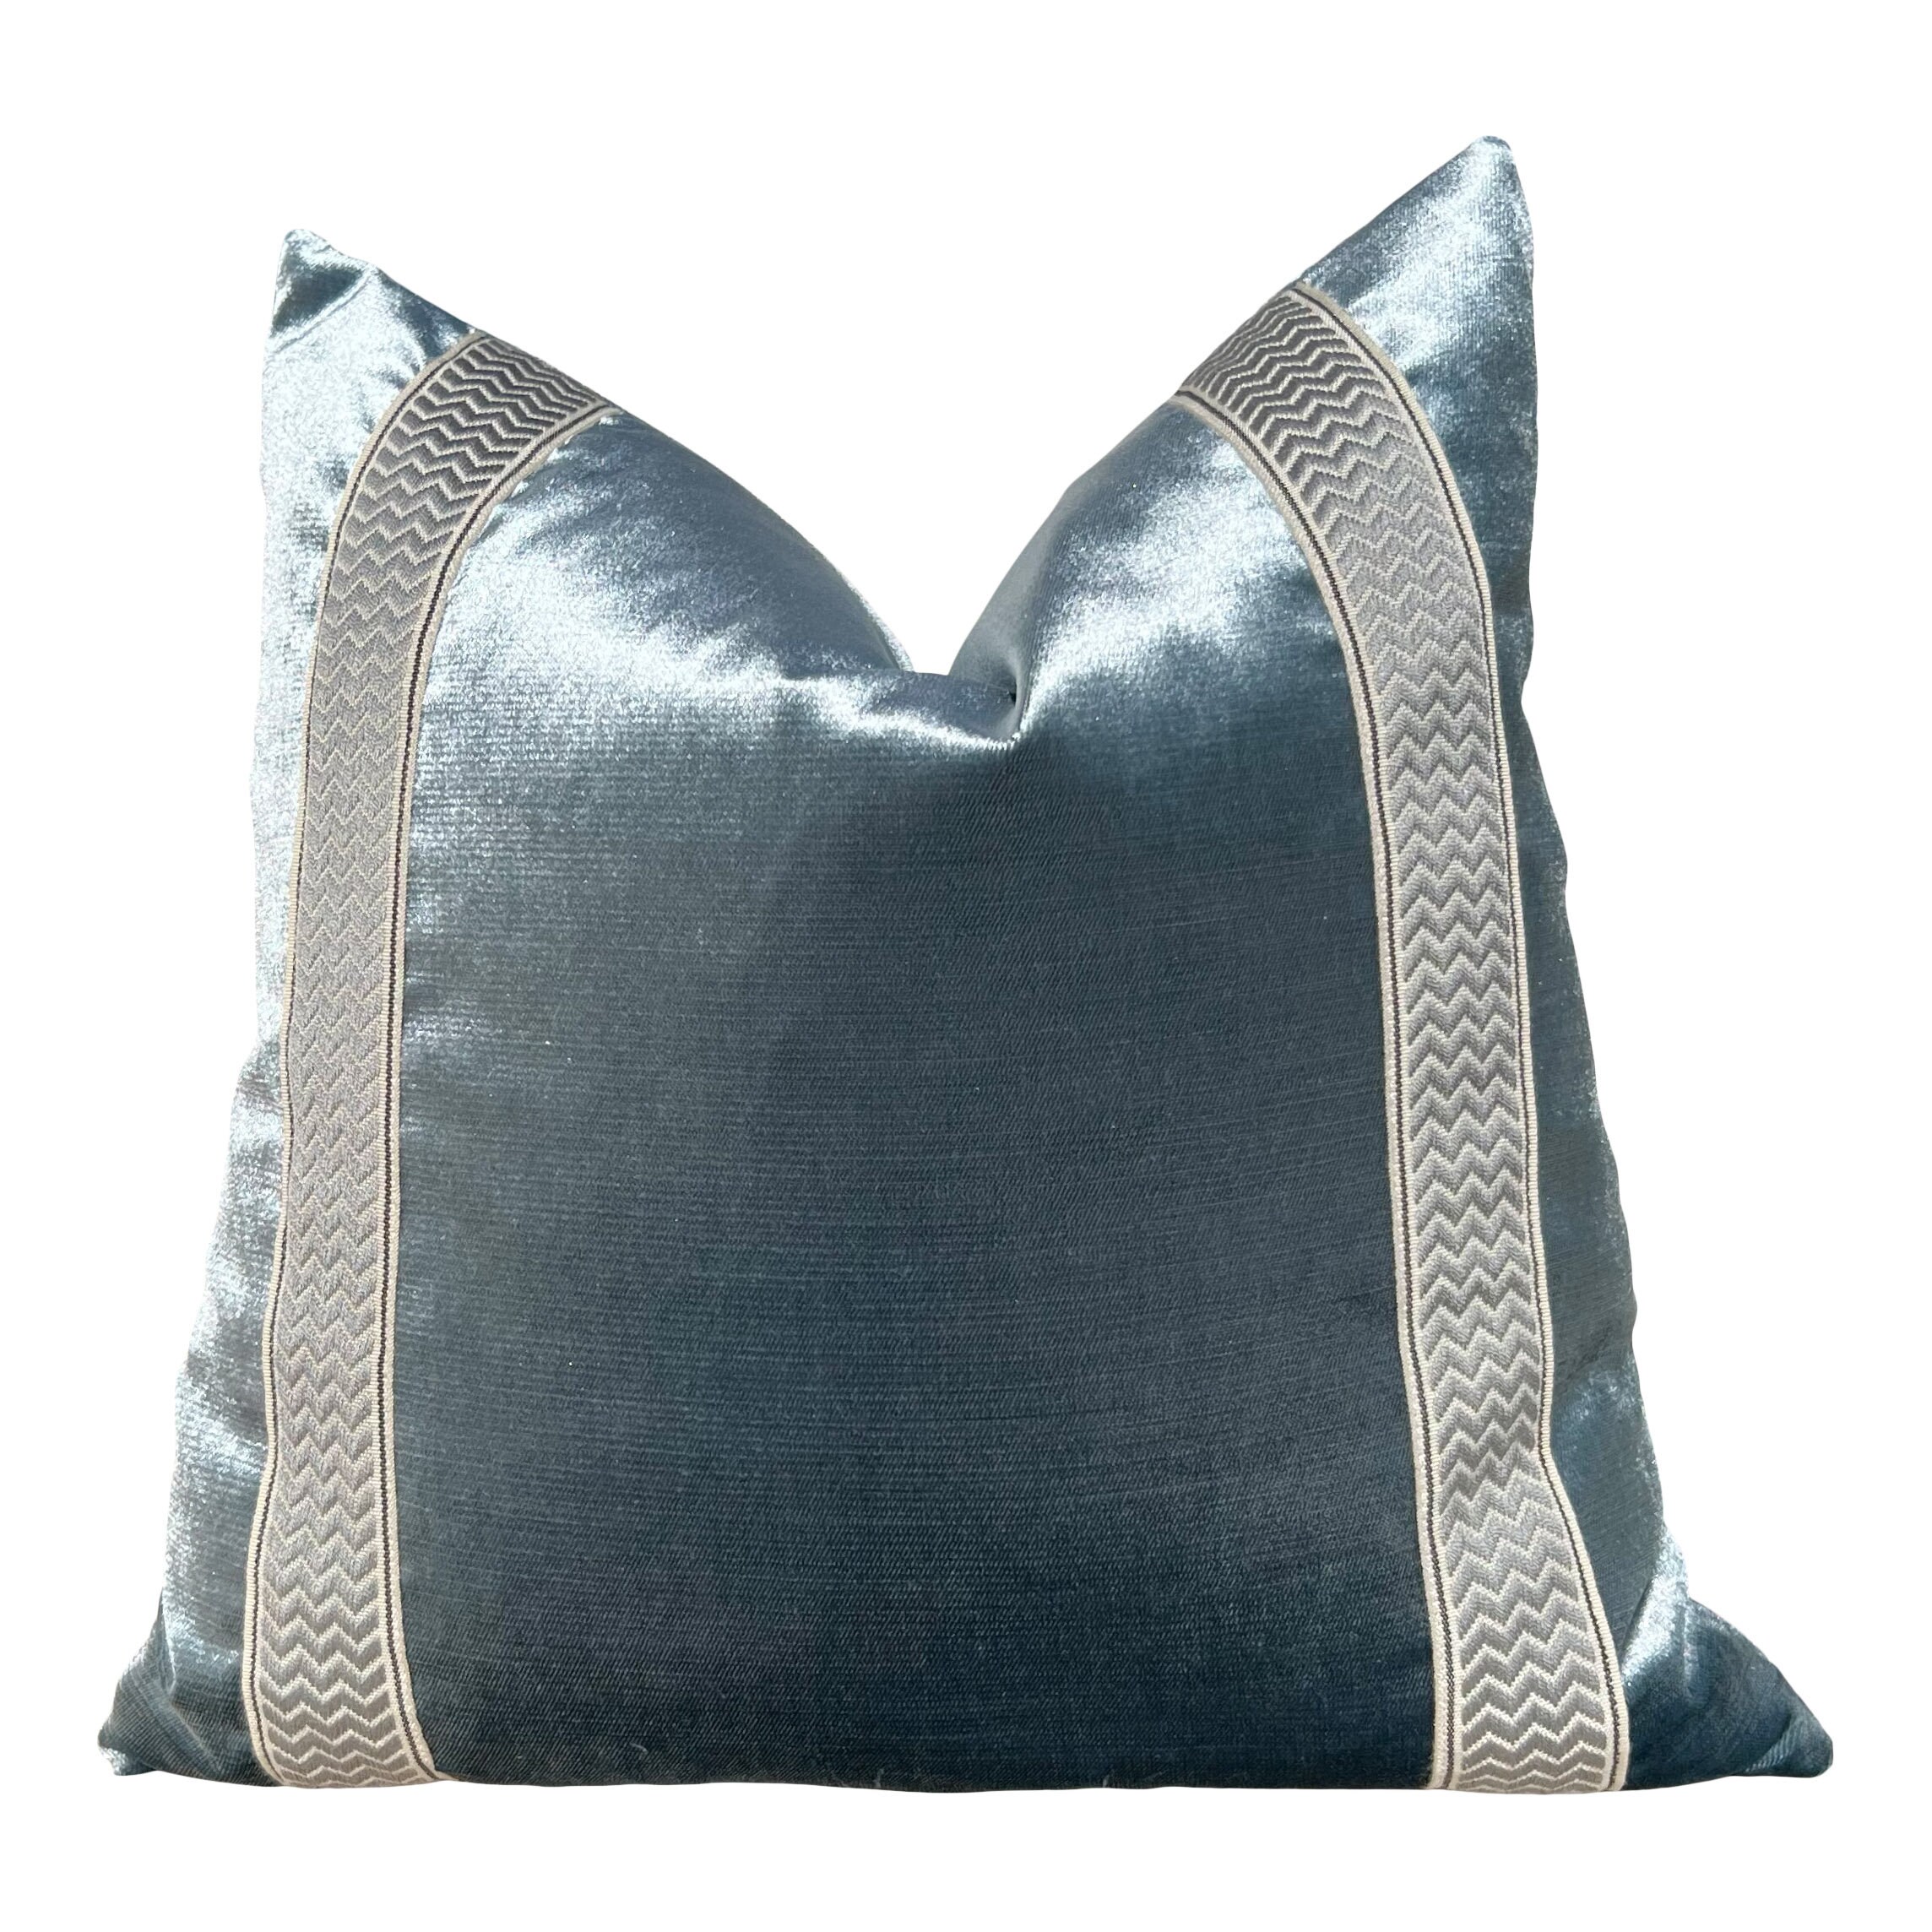 Castello Velvet Rectangular Throw Pillows - Pillow Decor